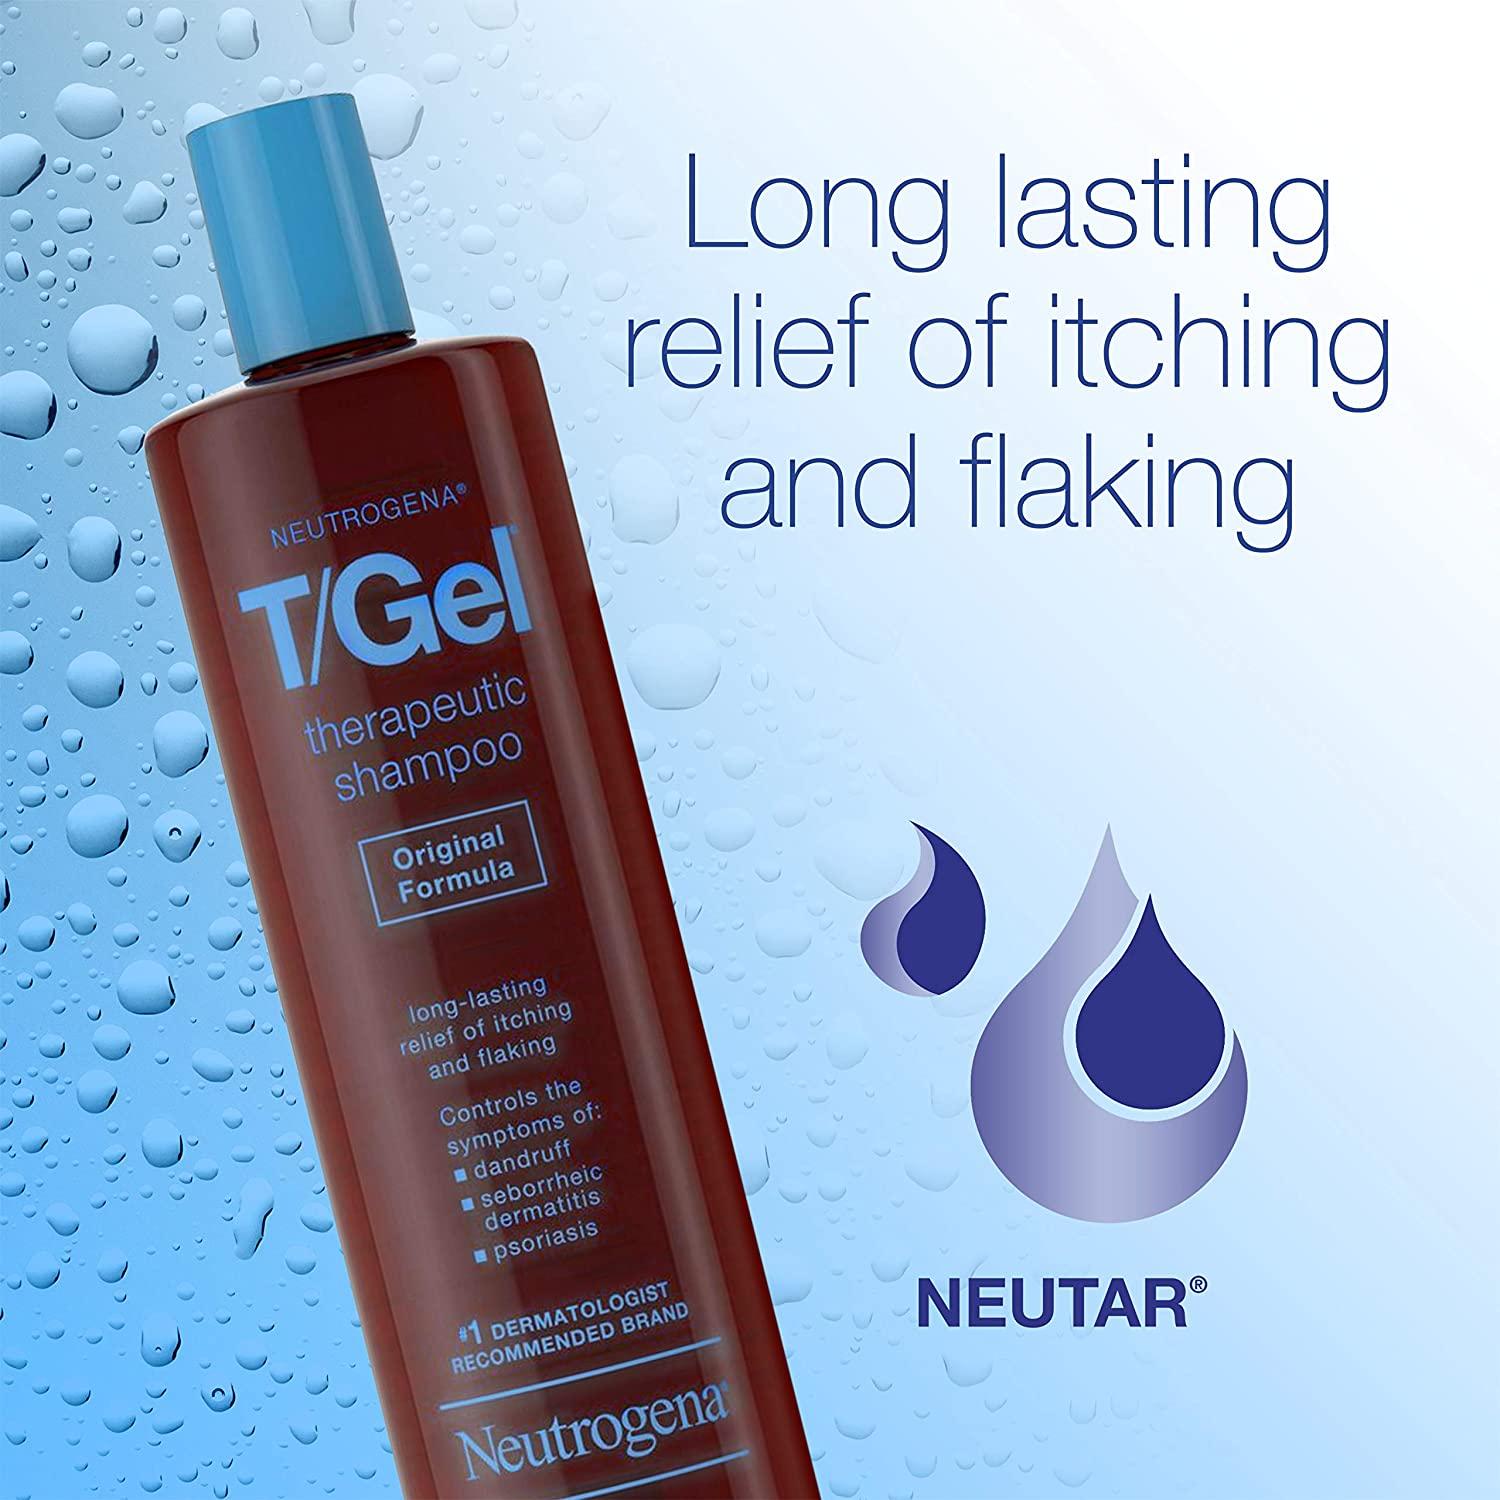 Neutrogena T/Gel Therapeutic Shampoo Original Formula, Anti-Dandruff Treatment for Lasting Relief of Itching as a Result of Psoriasis & Seborrheic Dermatitis, 2 x 8.5 fl. oz 8.5 Fl Oz (Pack